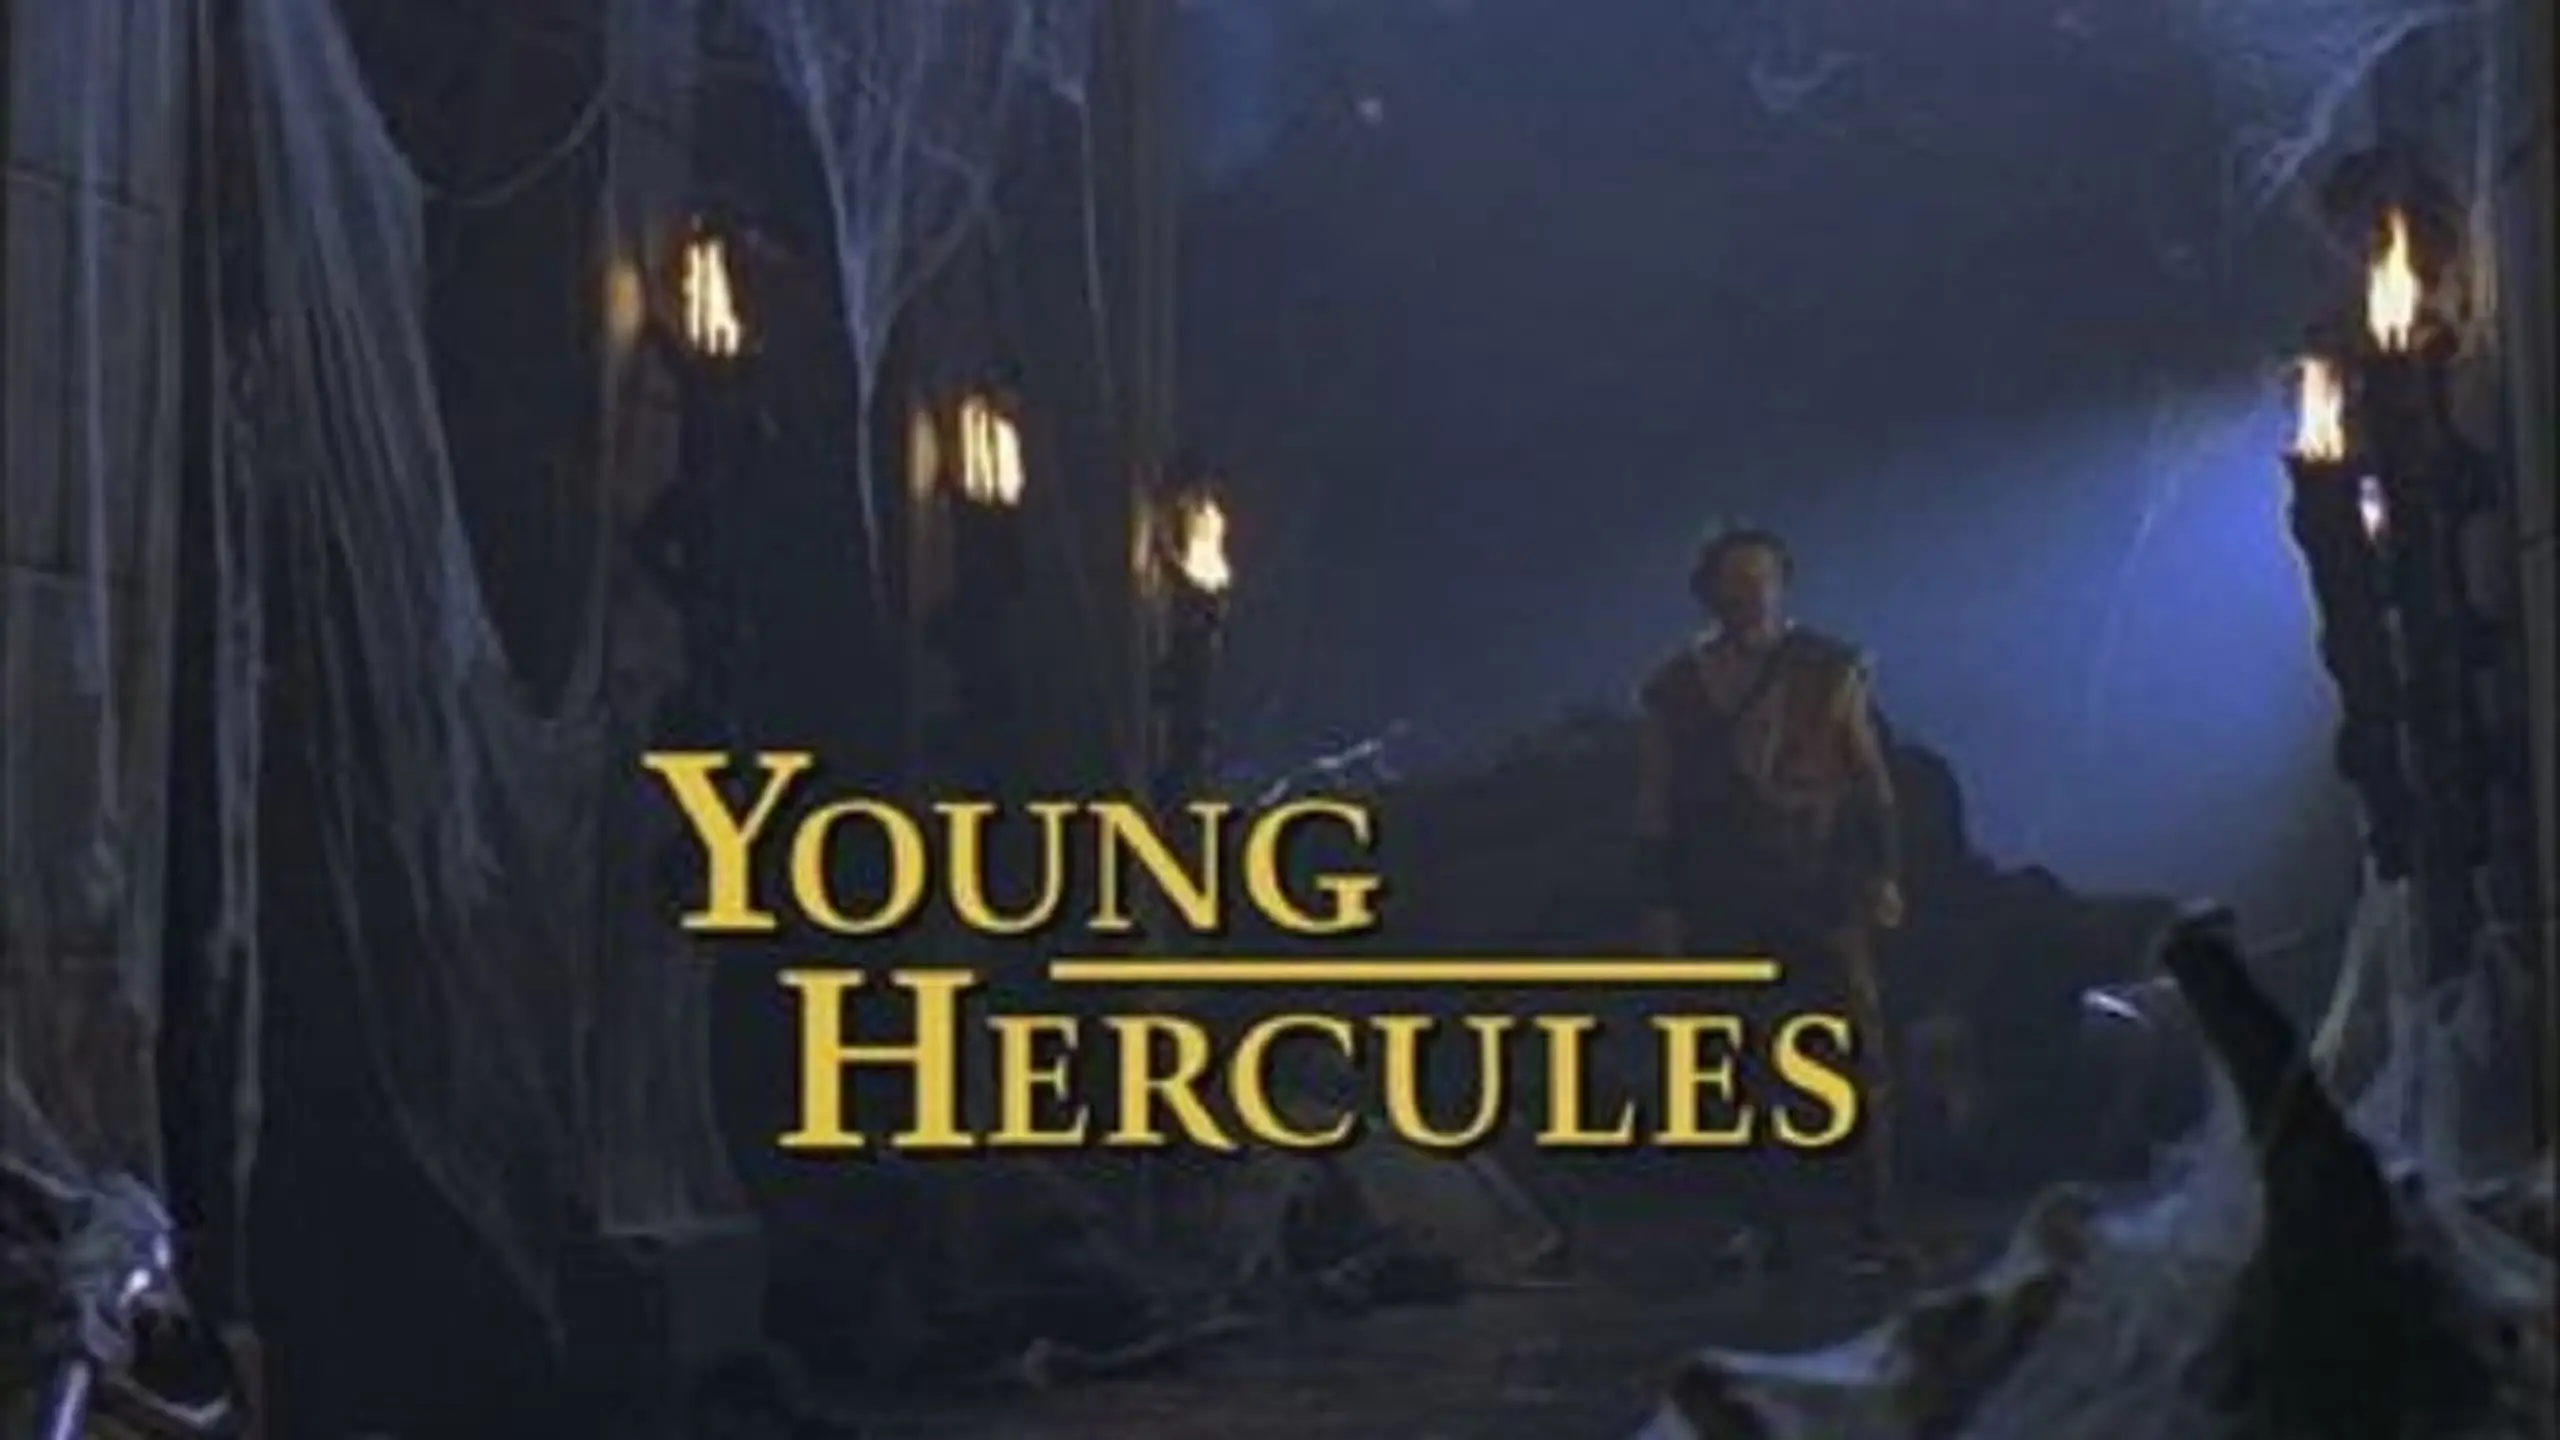 Der junge Hercules